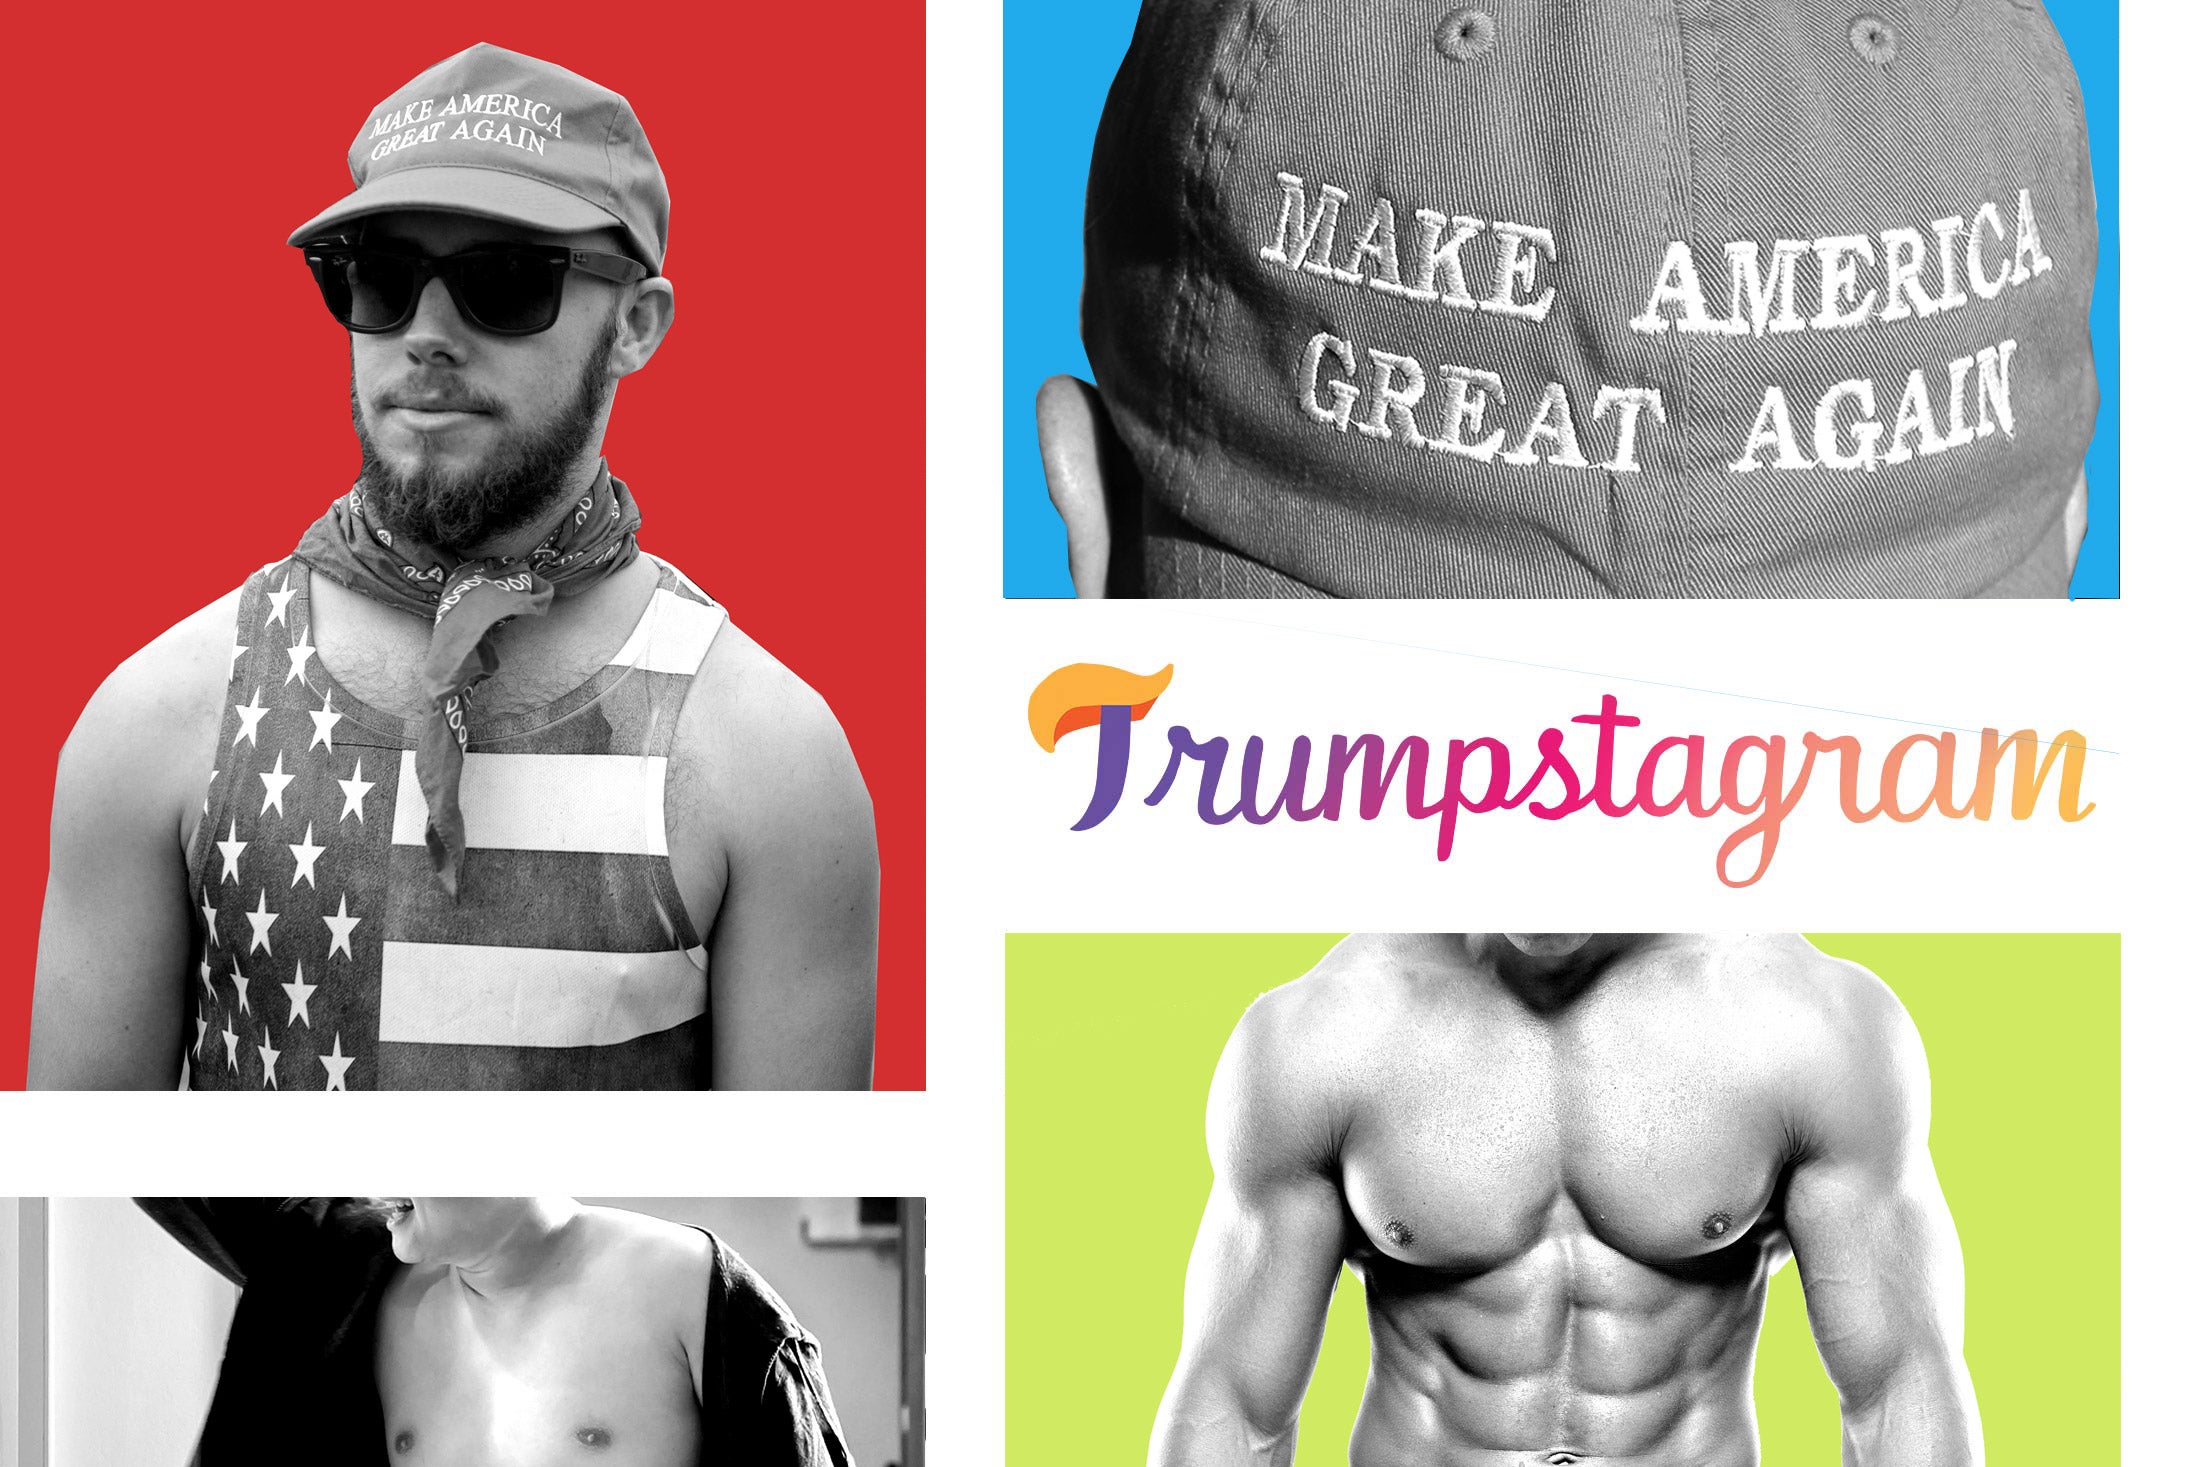 Photo illustration: Shirtless men, a MAGA hat, and the Trumpstagram logo.